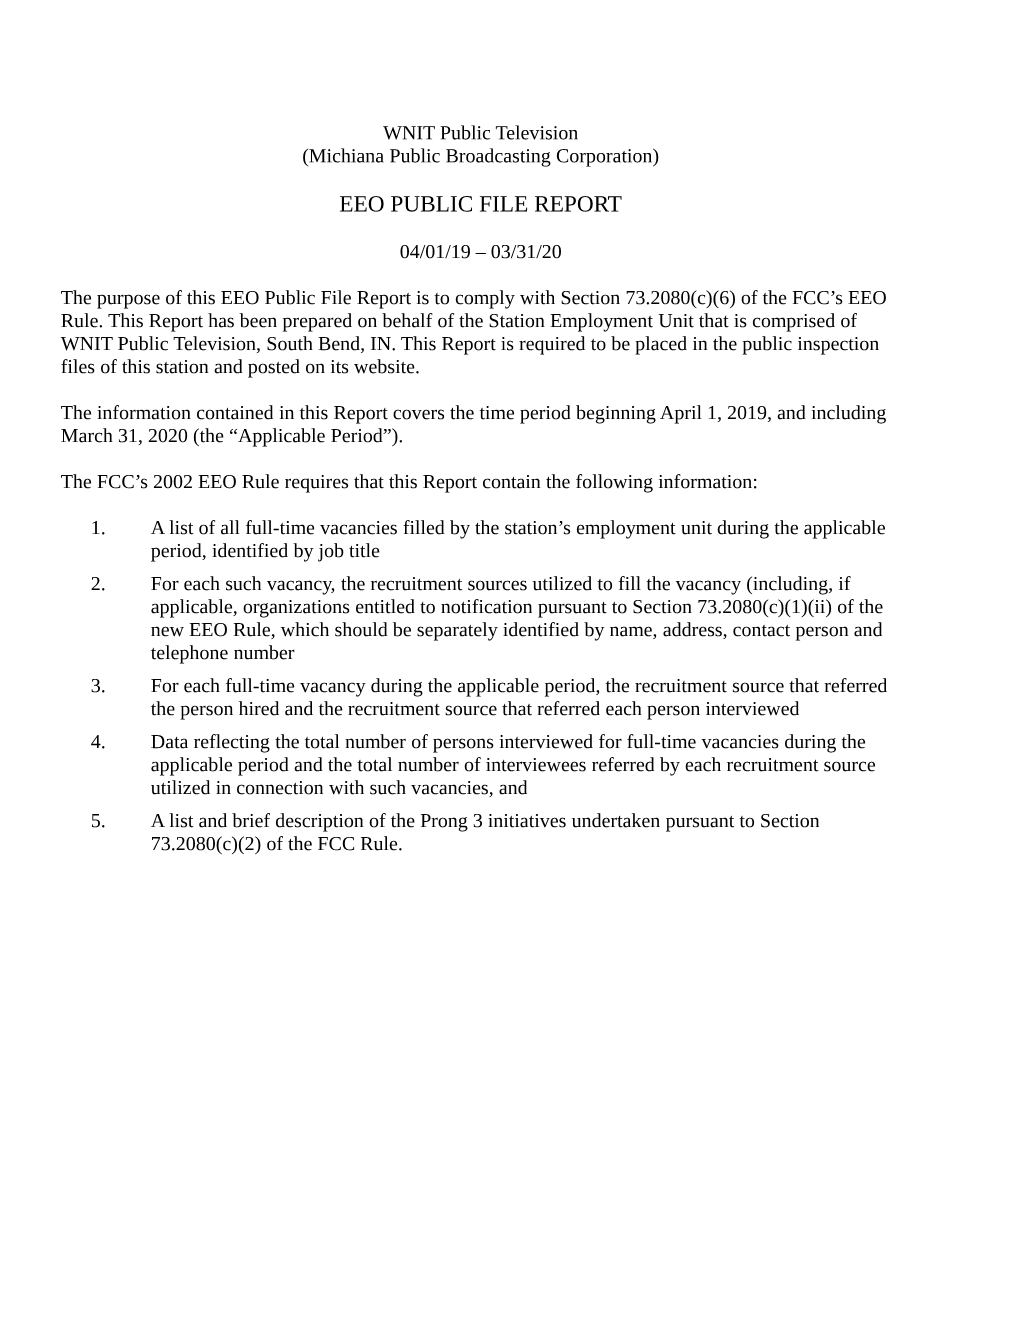 Eeo Public File Report